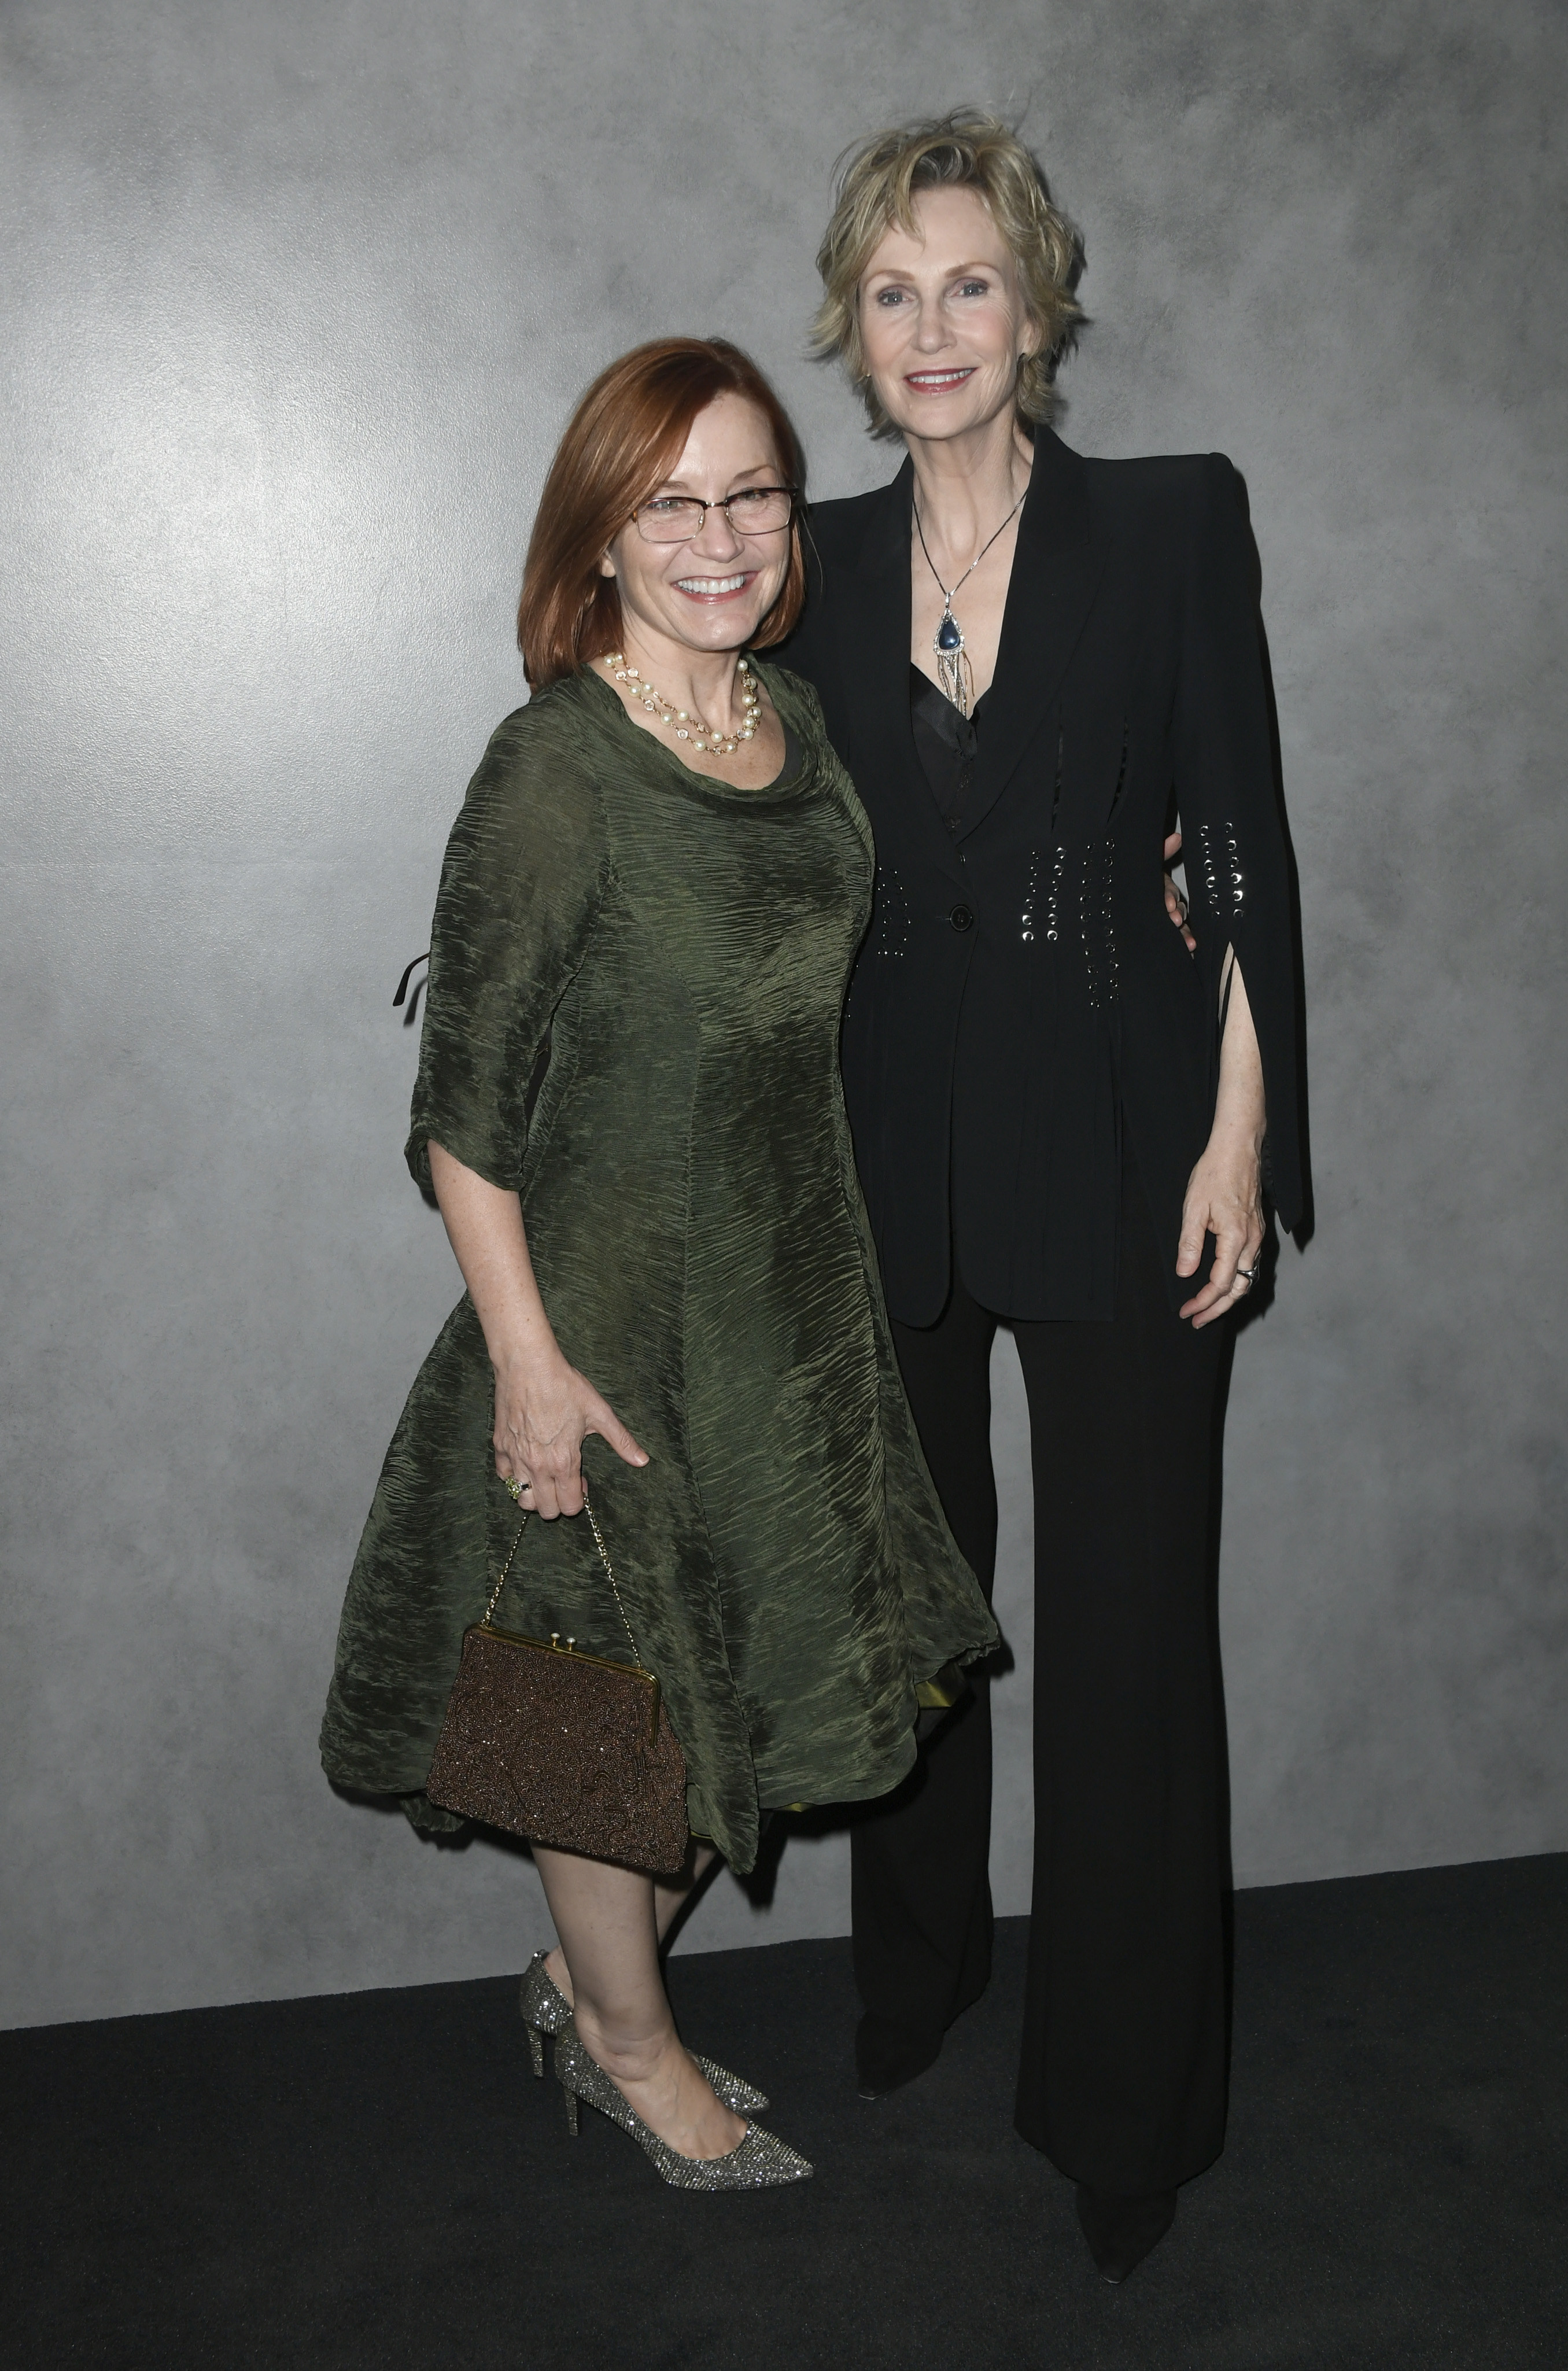 Jennifer Cheyne and Jane Lynch at a formal event